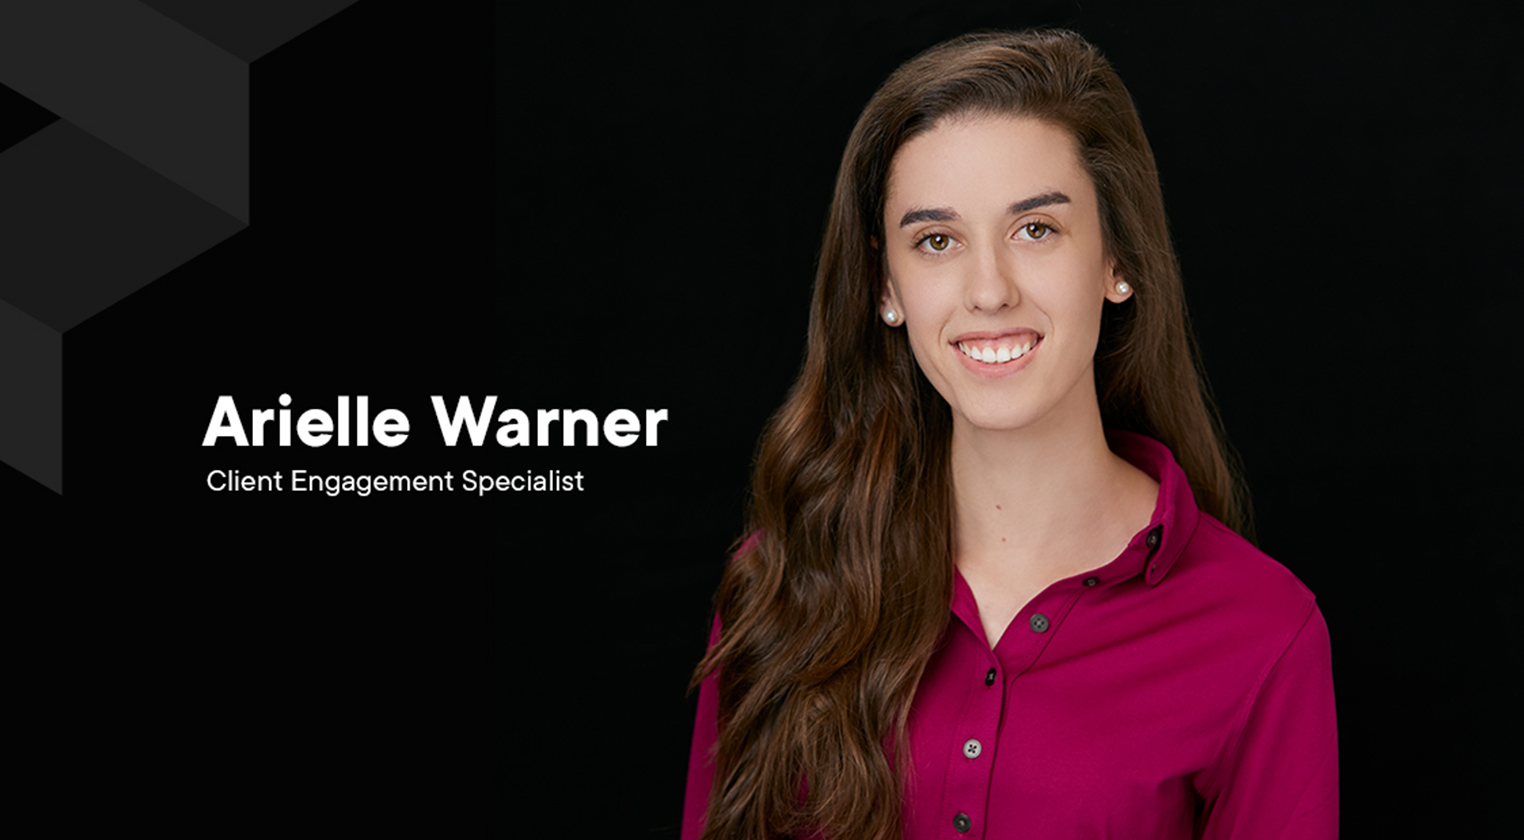 Meet Arielle Warner